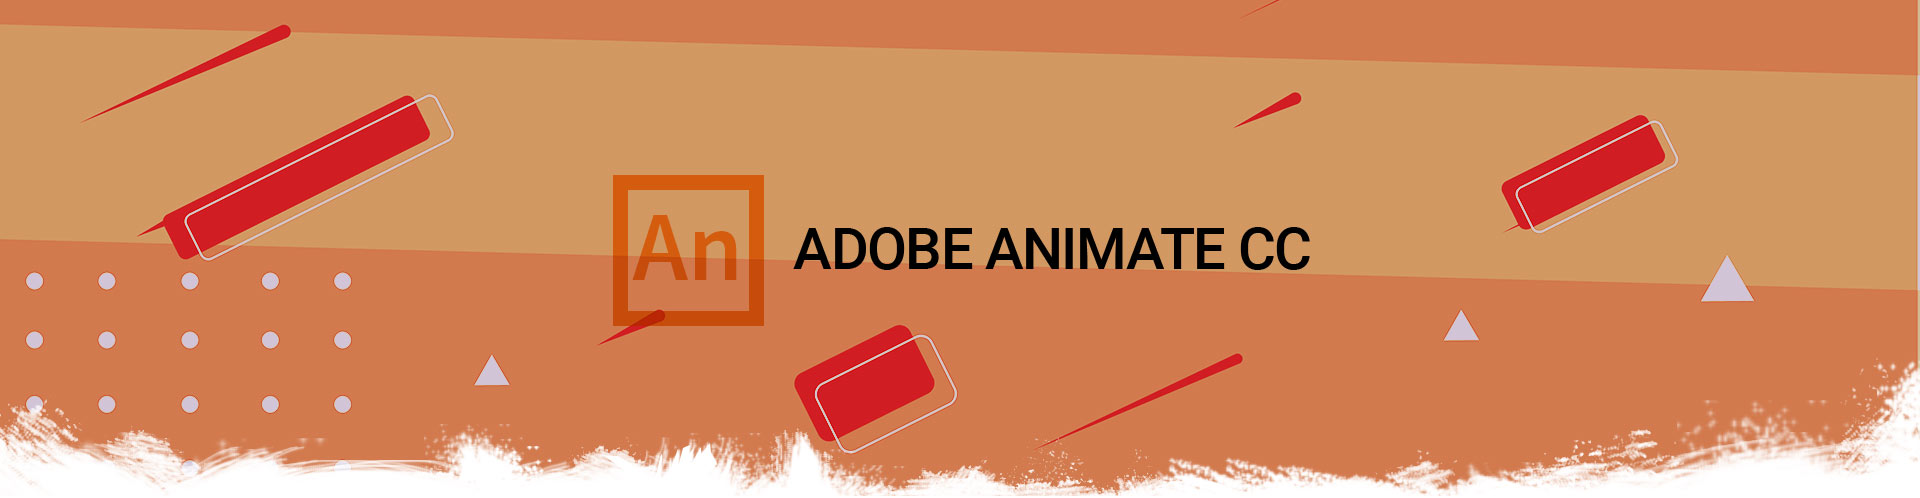 Adobe Flash Philippines Training - 2D Animation Course